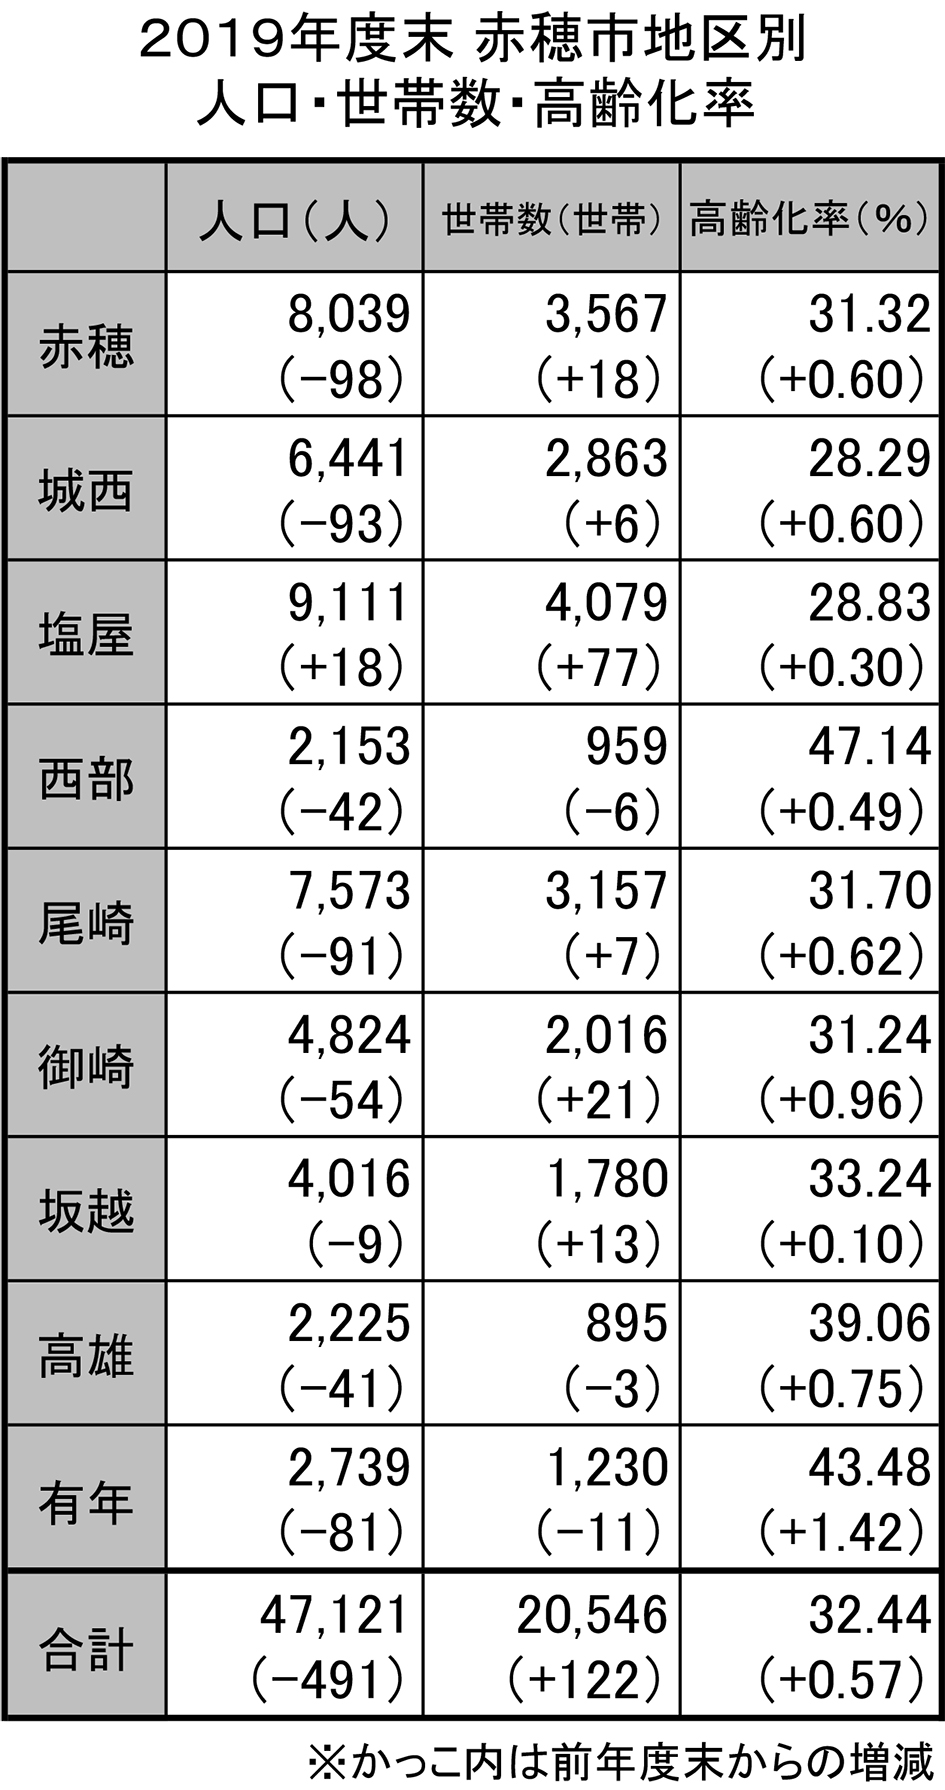 ２０１９年度末の赤穂市地区別人口と世帯数